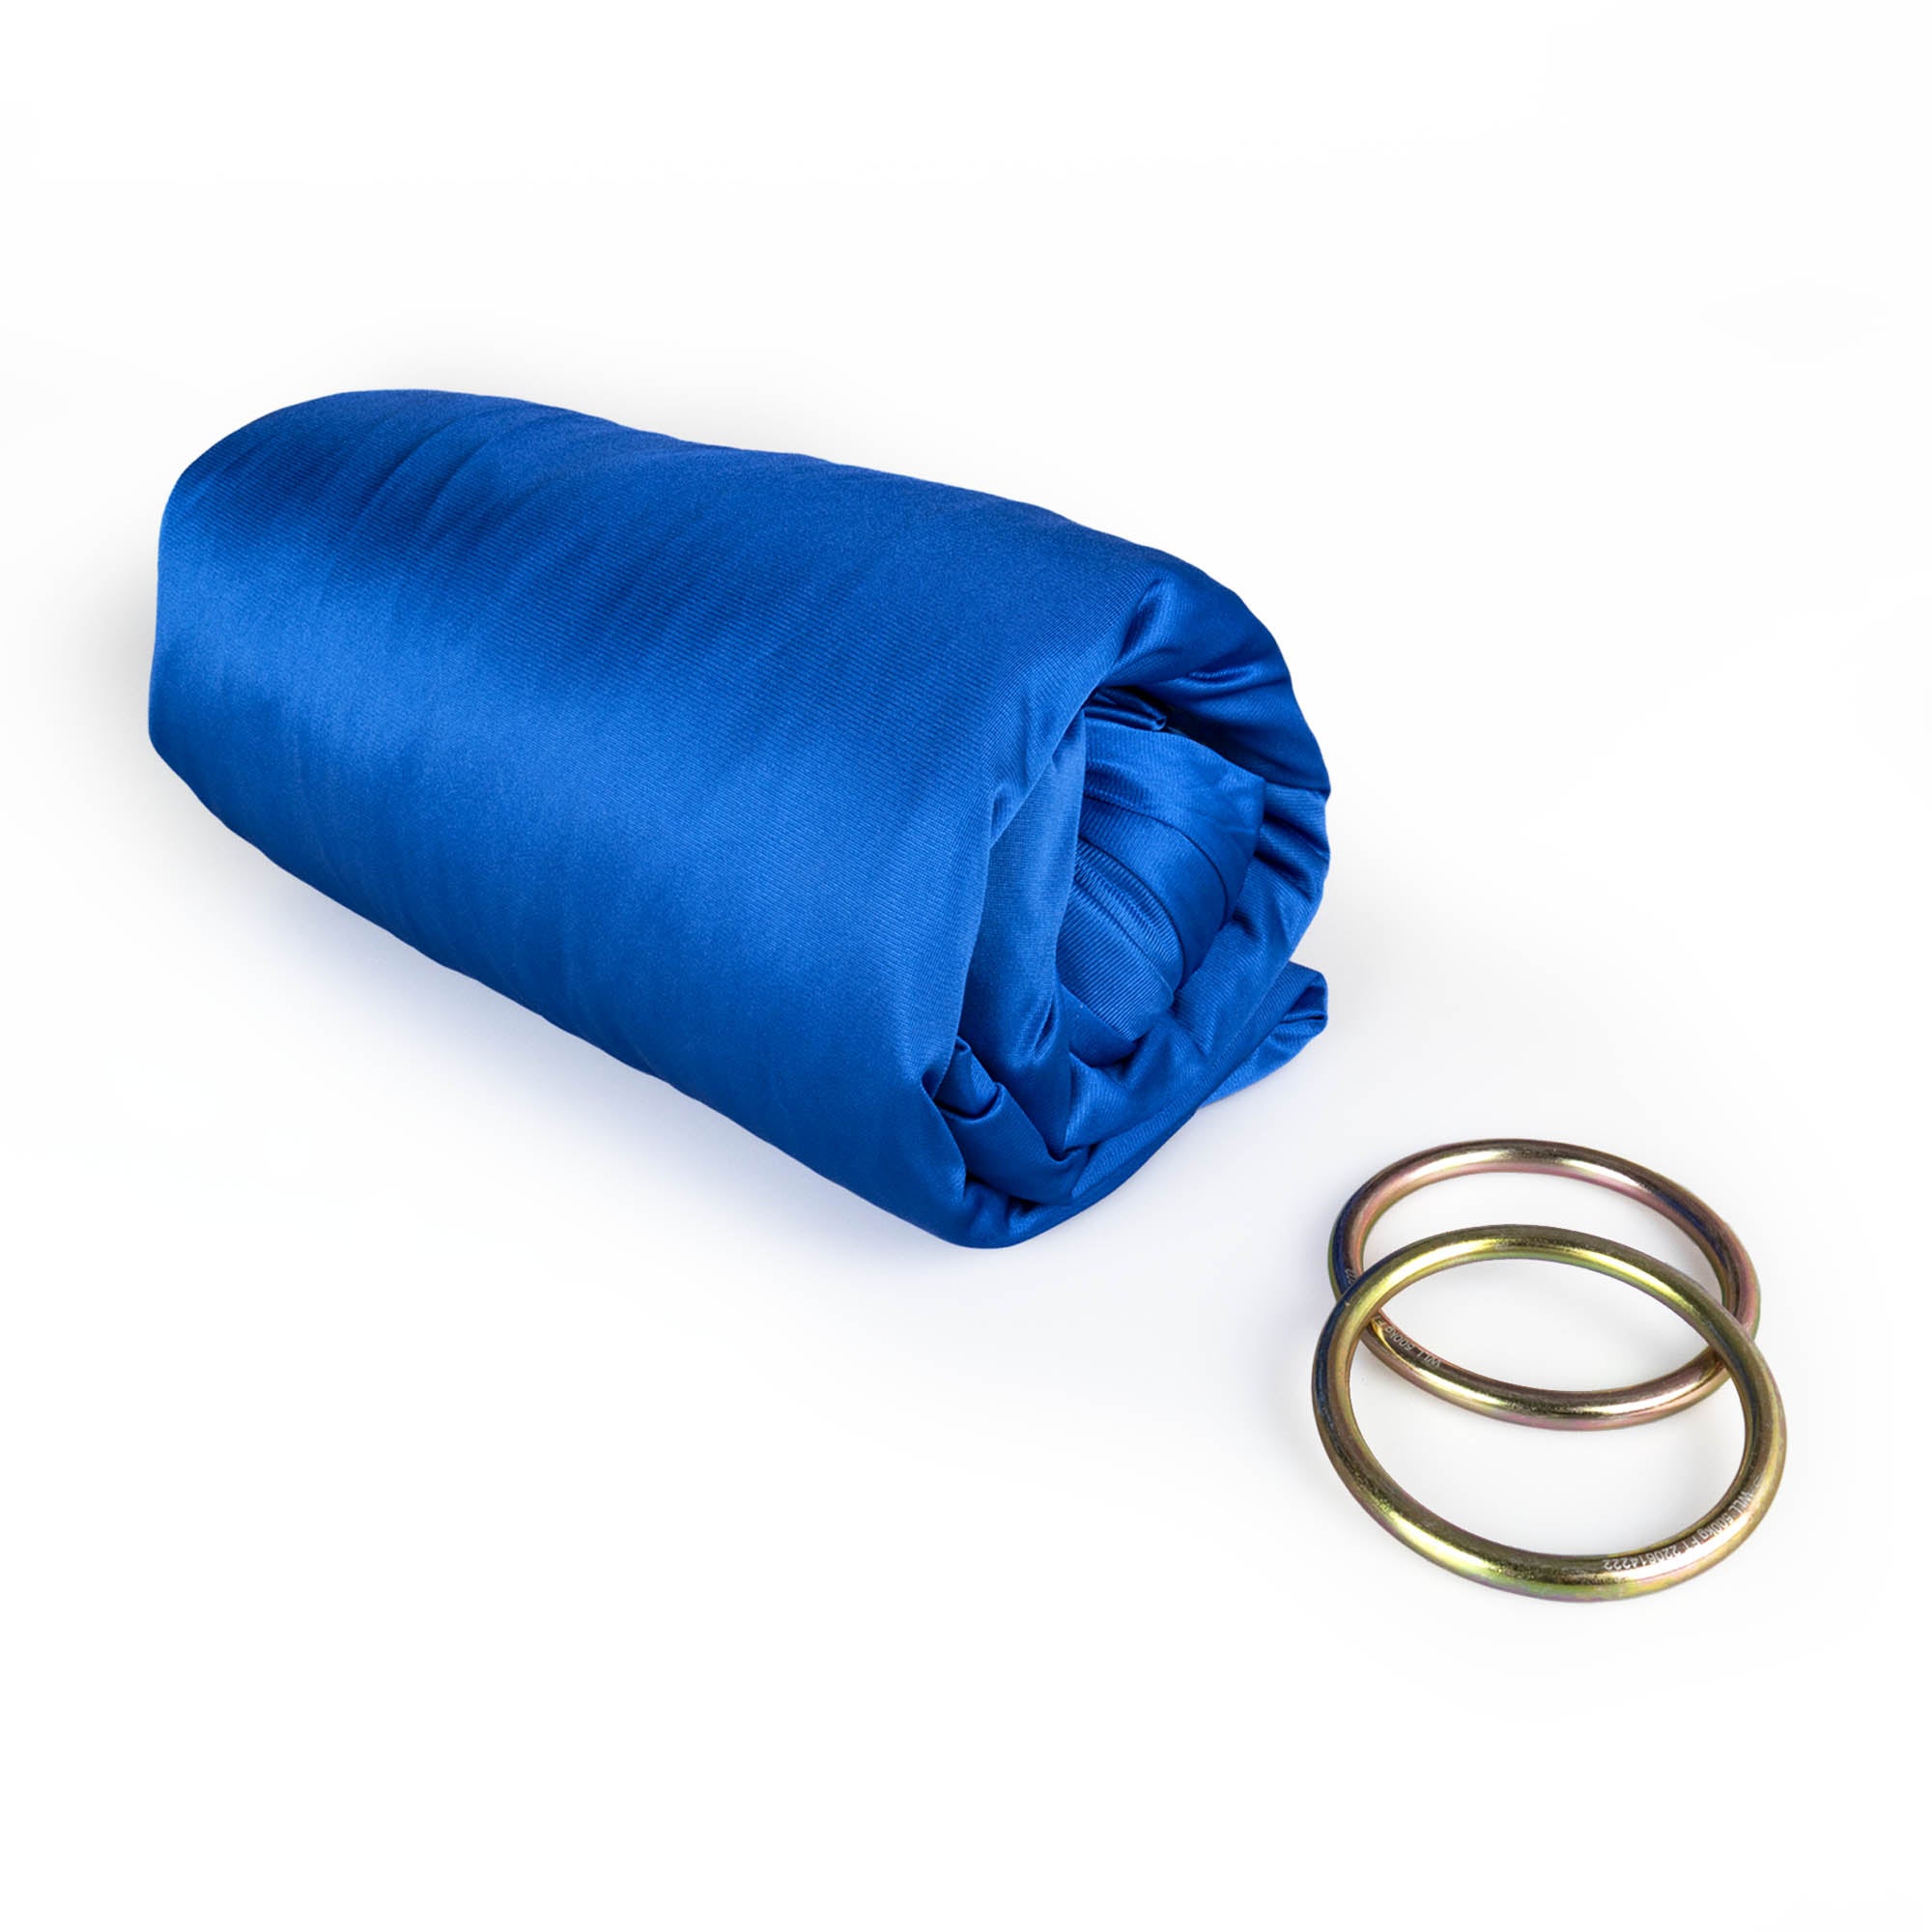 Royal blue yoga hammock with O rings detached